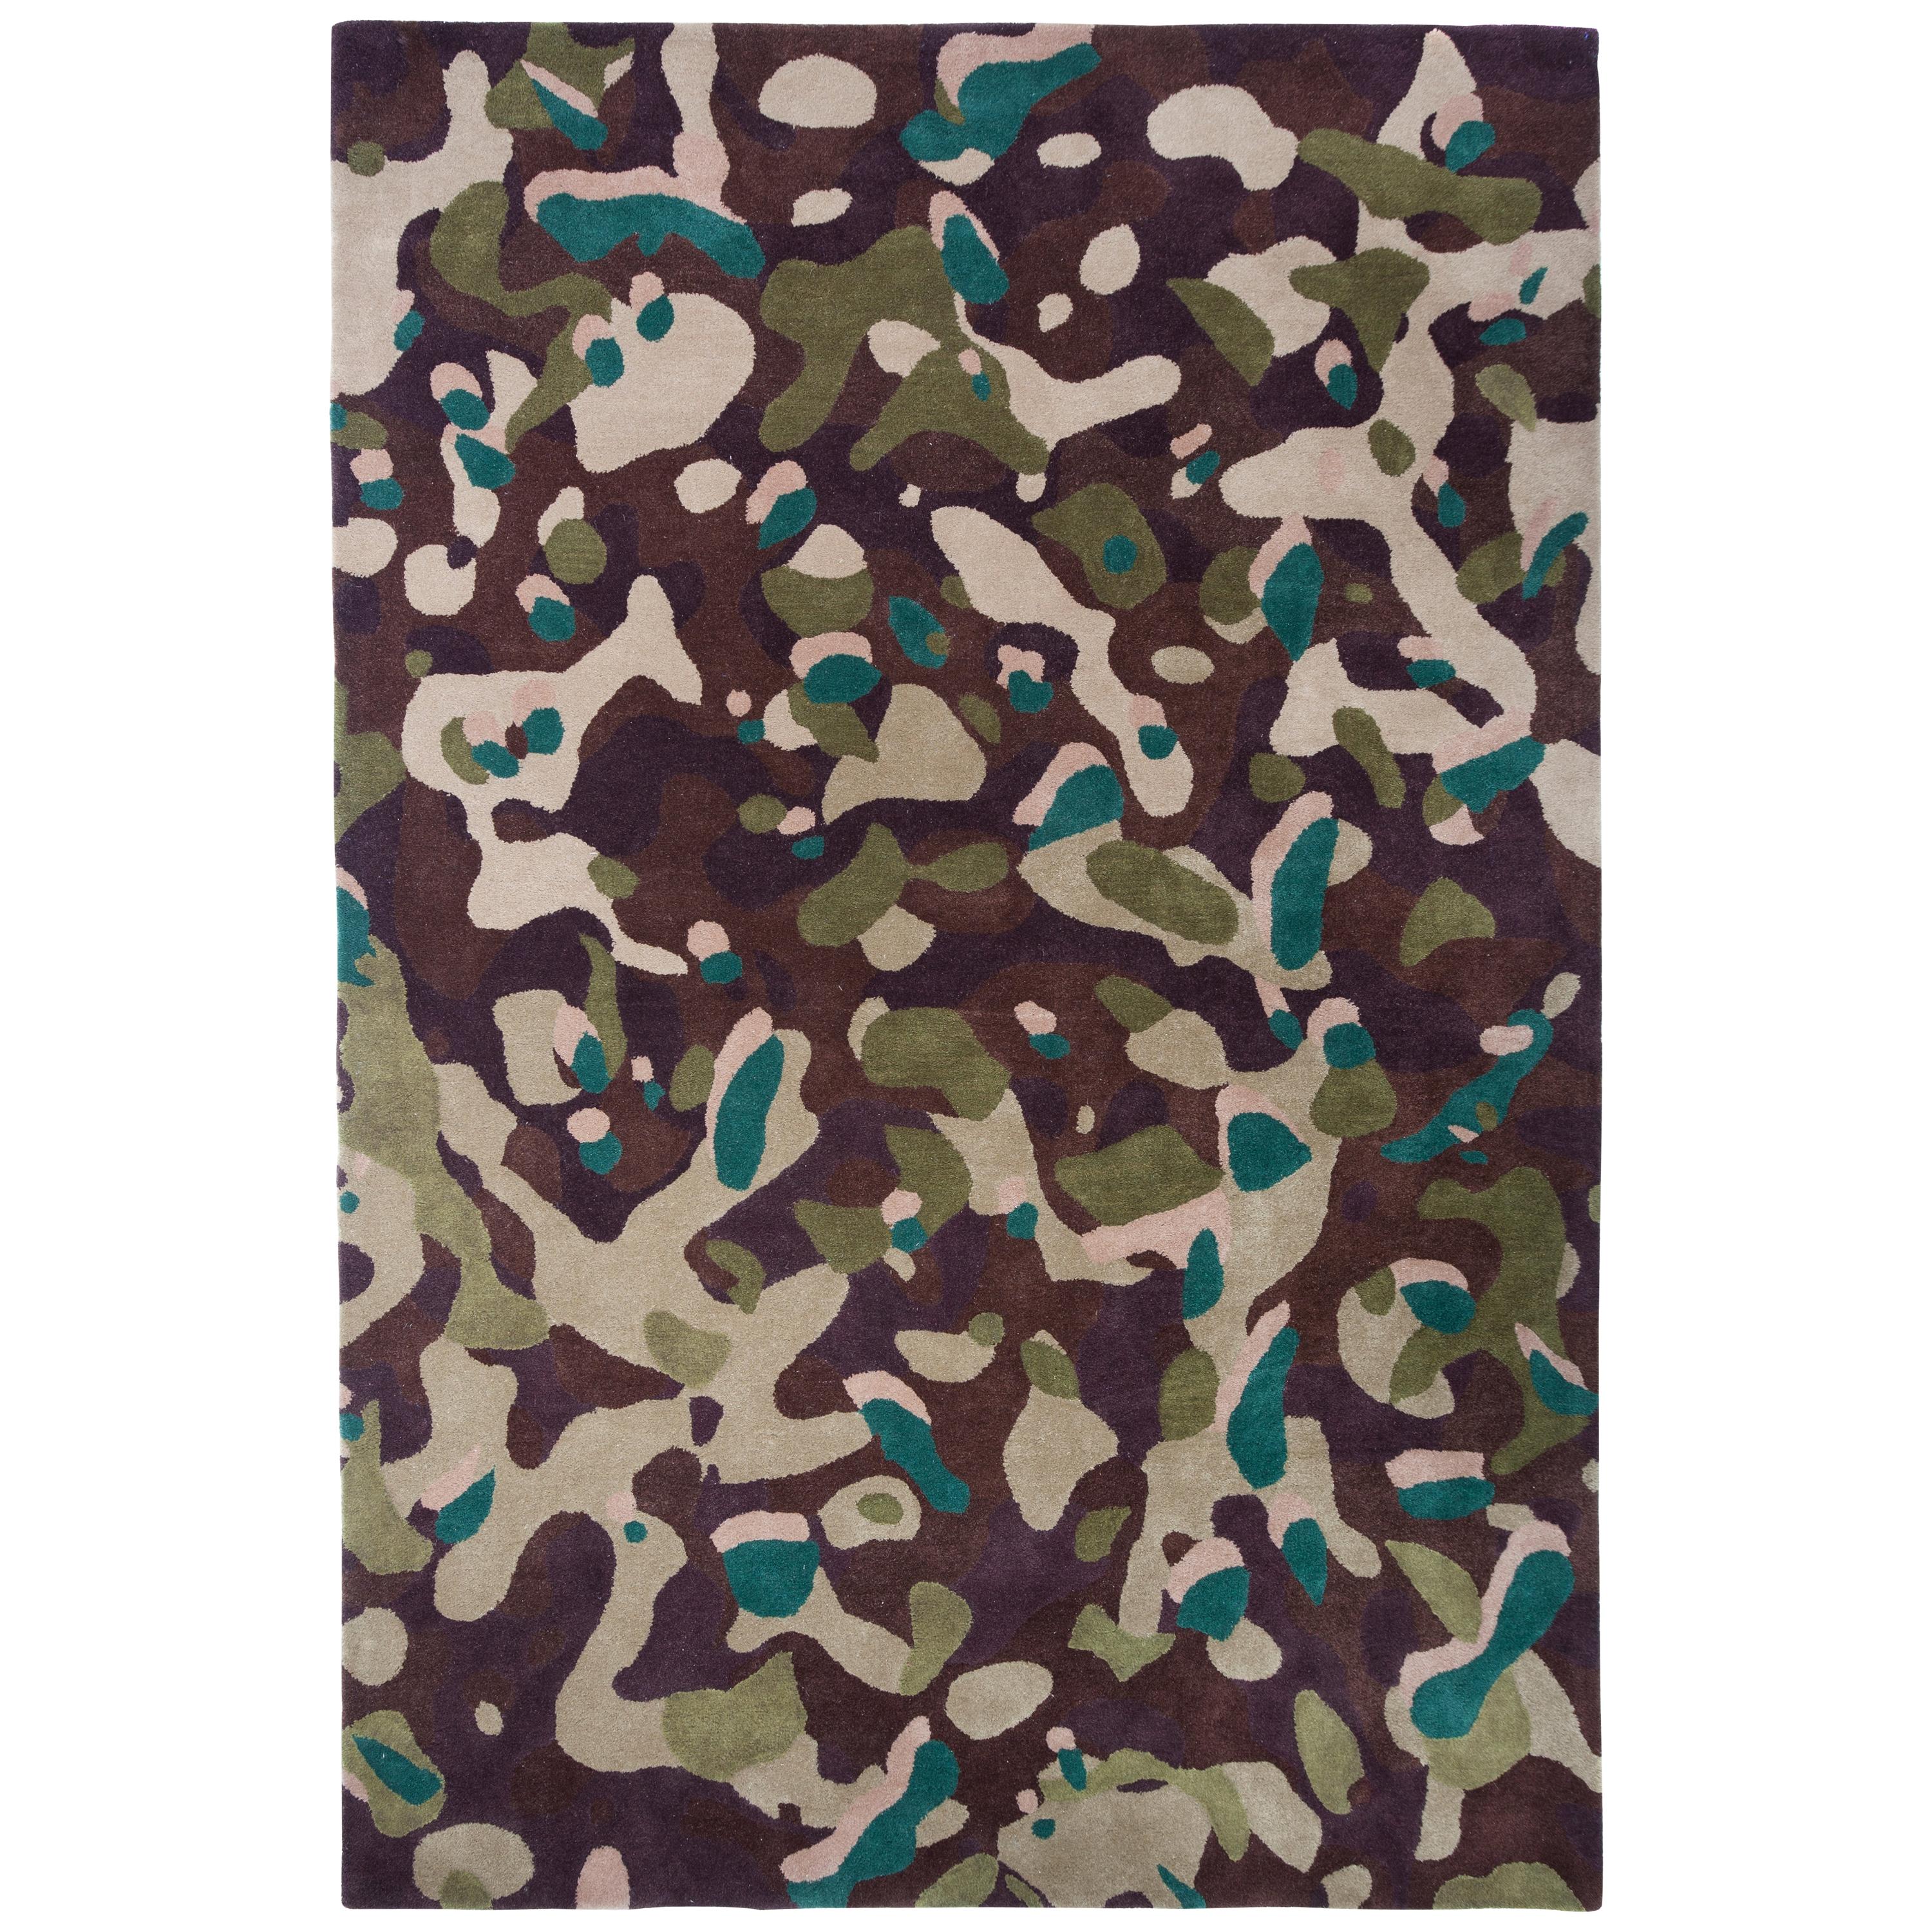 Camouflage Macro, Handtufted, Wool and Viscose, Alberto Artesani